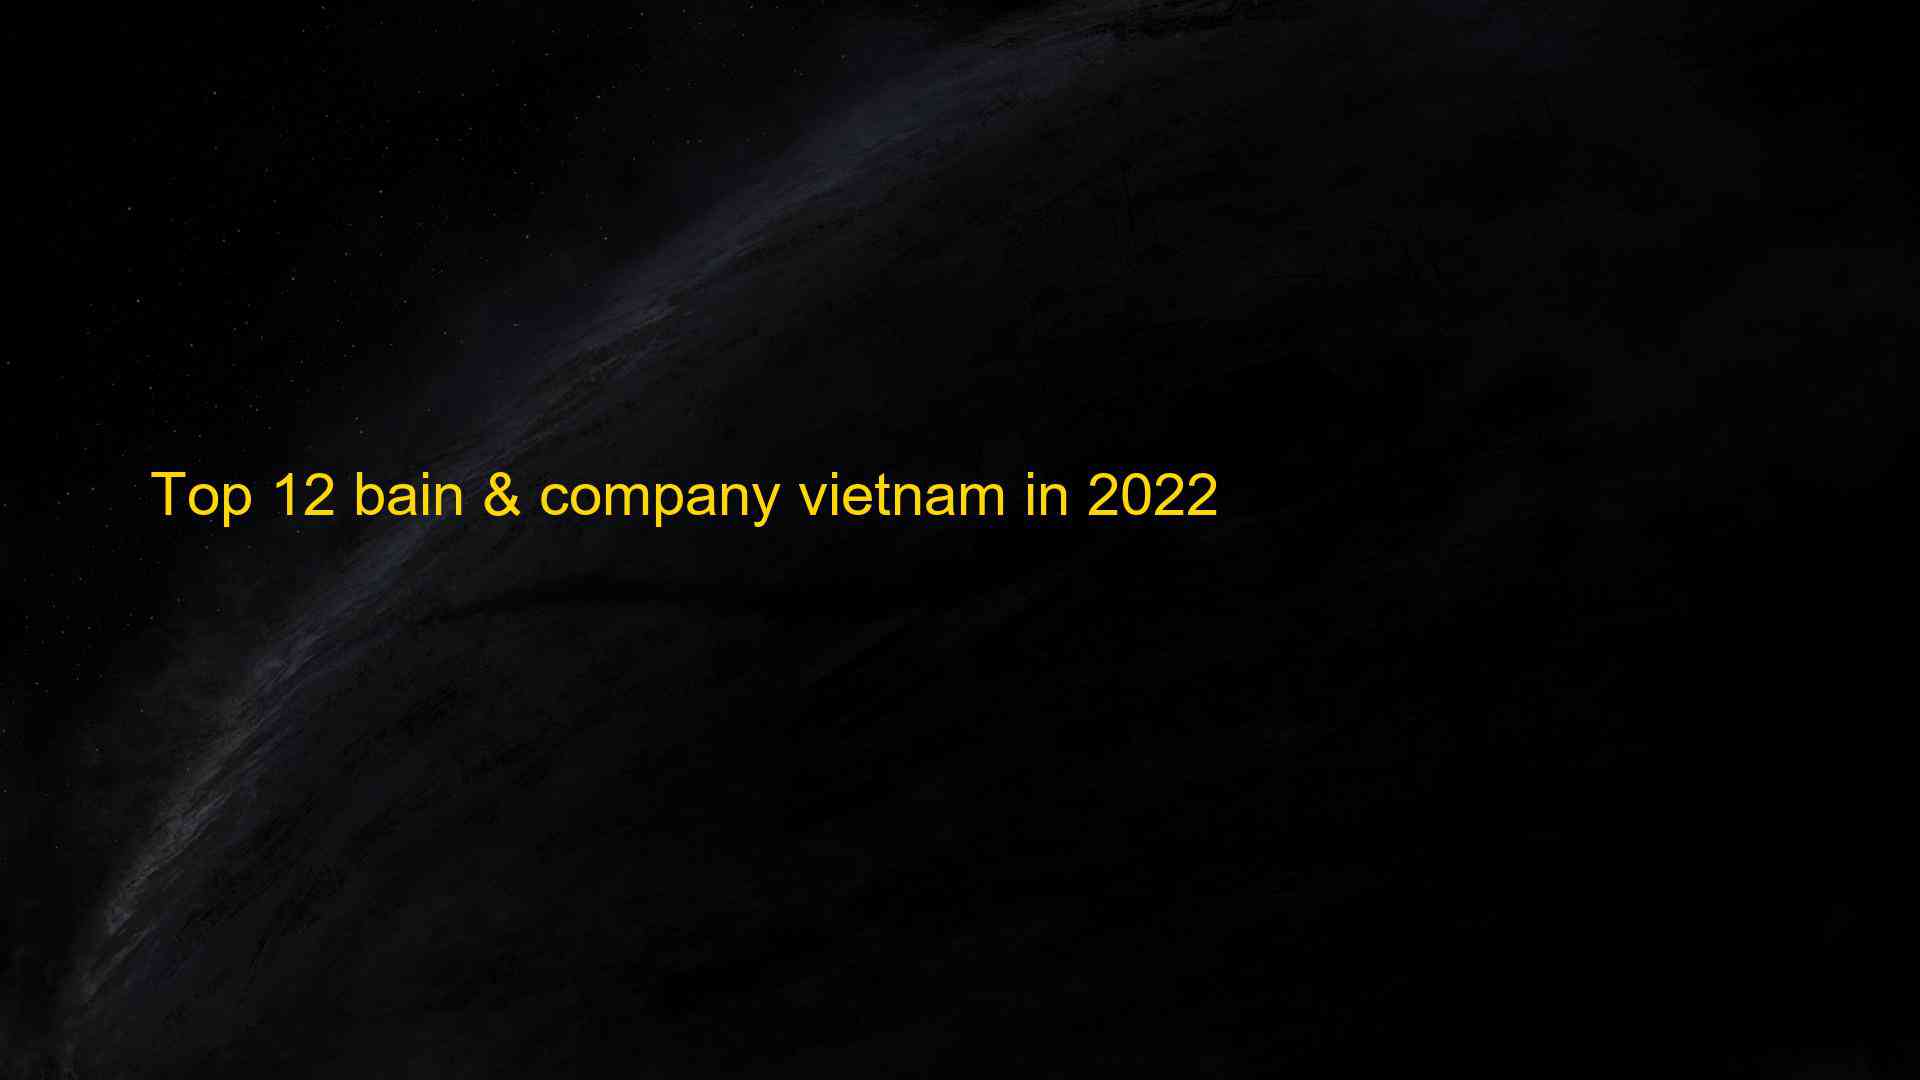 Top 12 bain company vietnam in 2022 1660023496